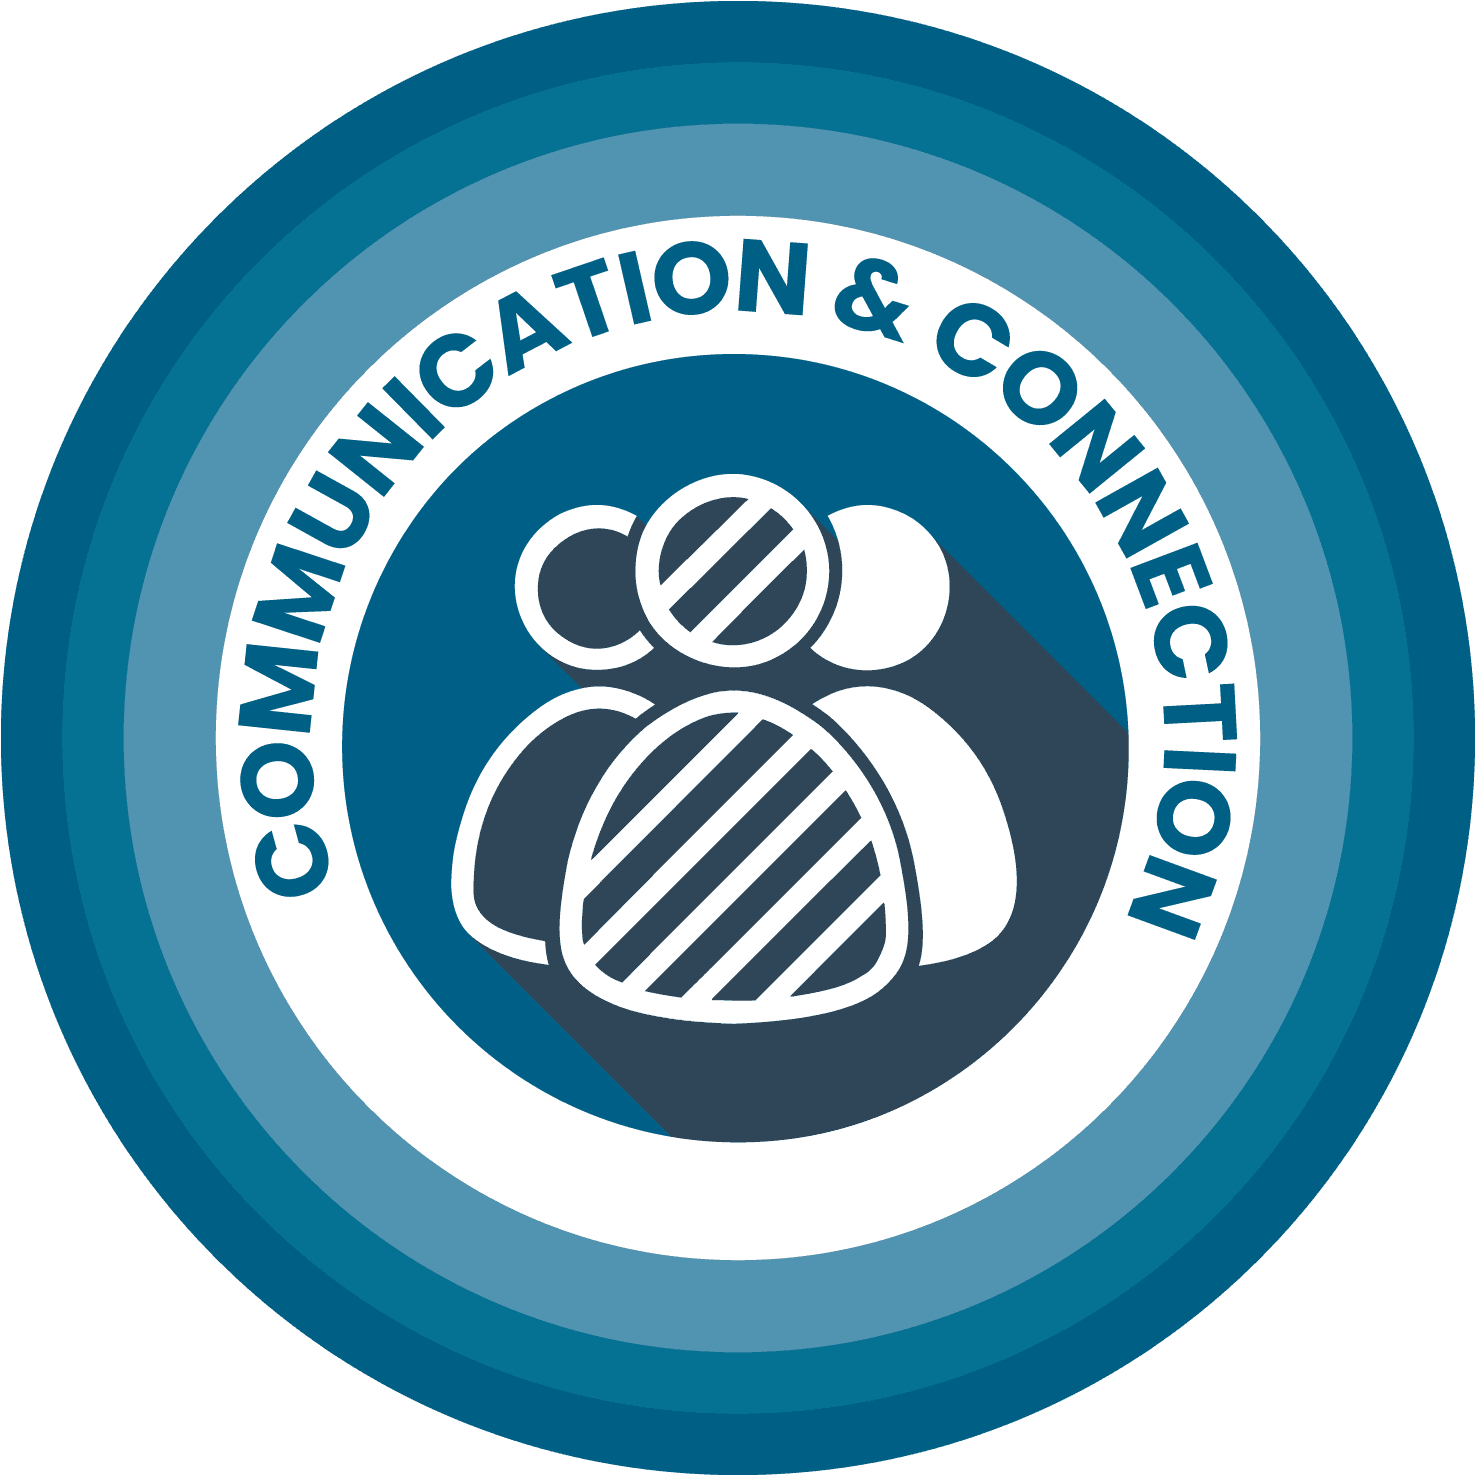 COMMUNICATION & CONNECTION